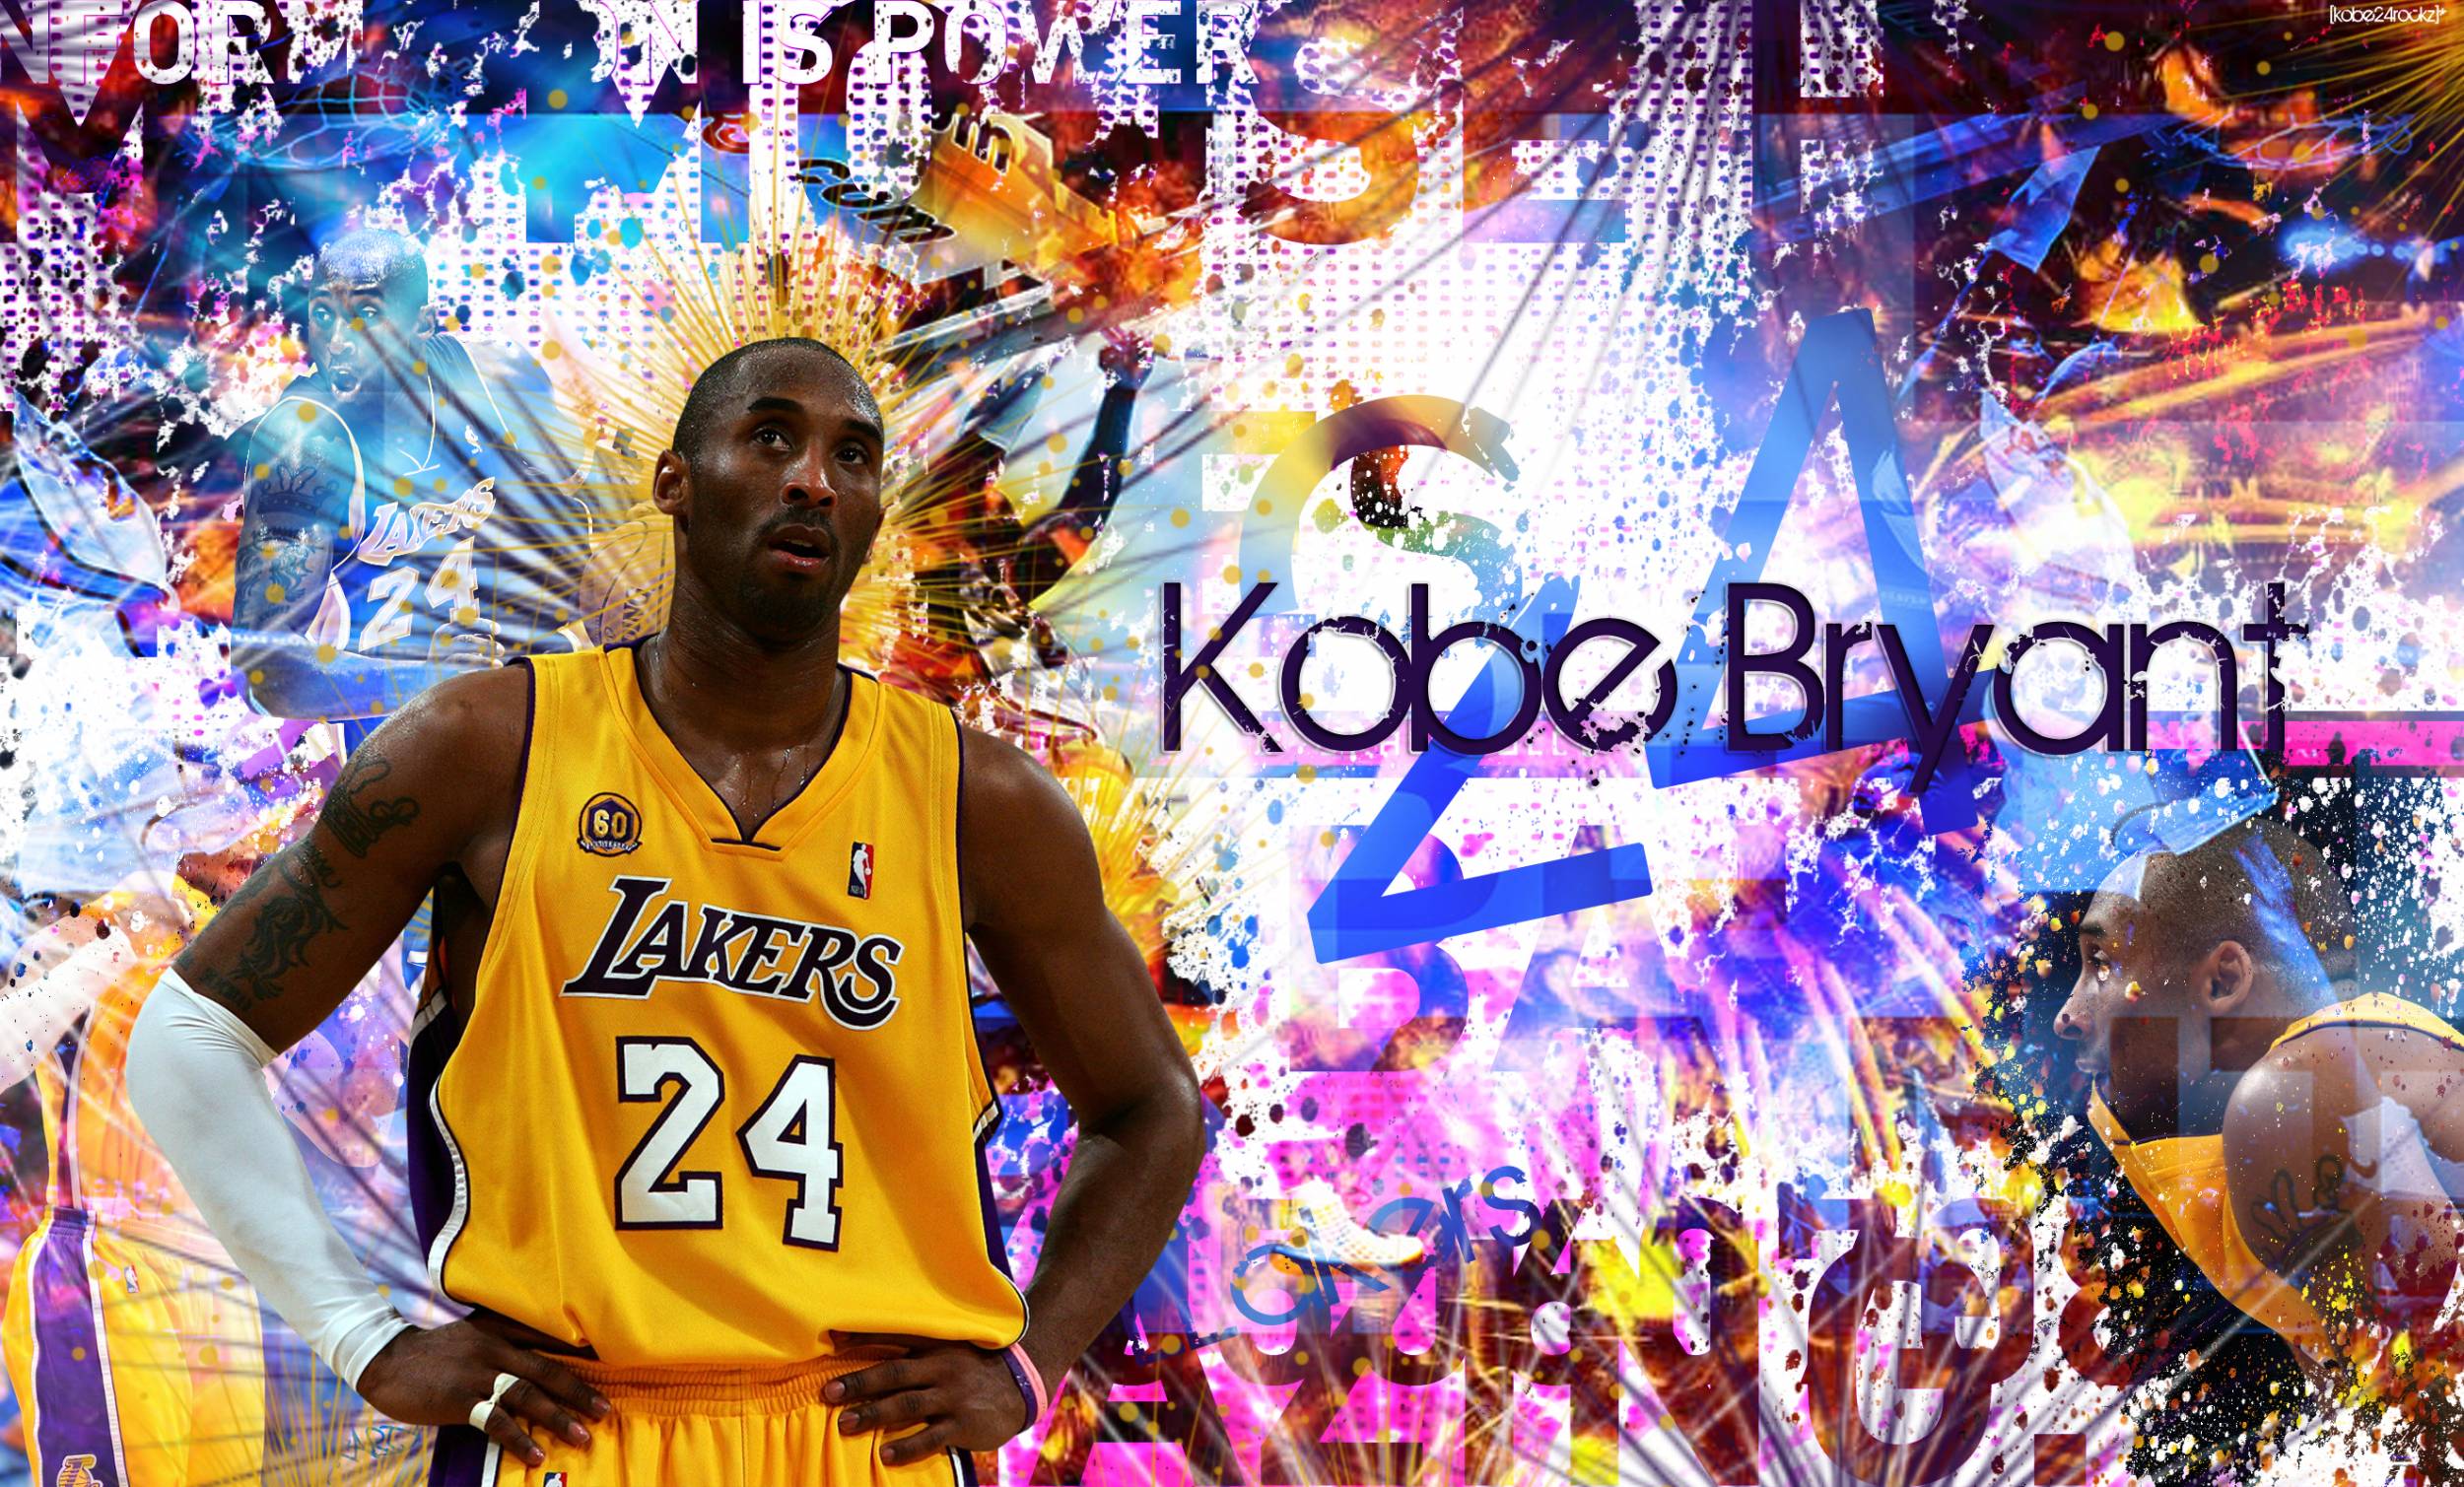 Cool Wallpaper Of Kobe Bryant